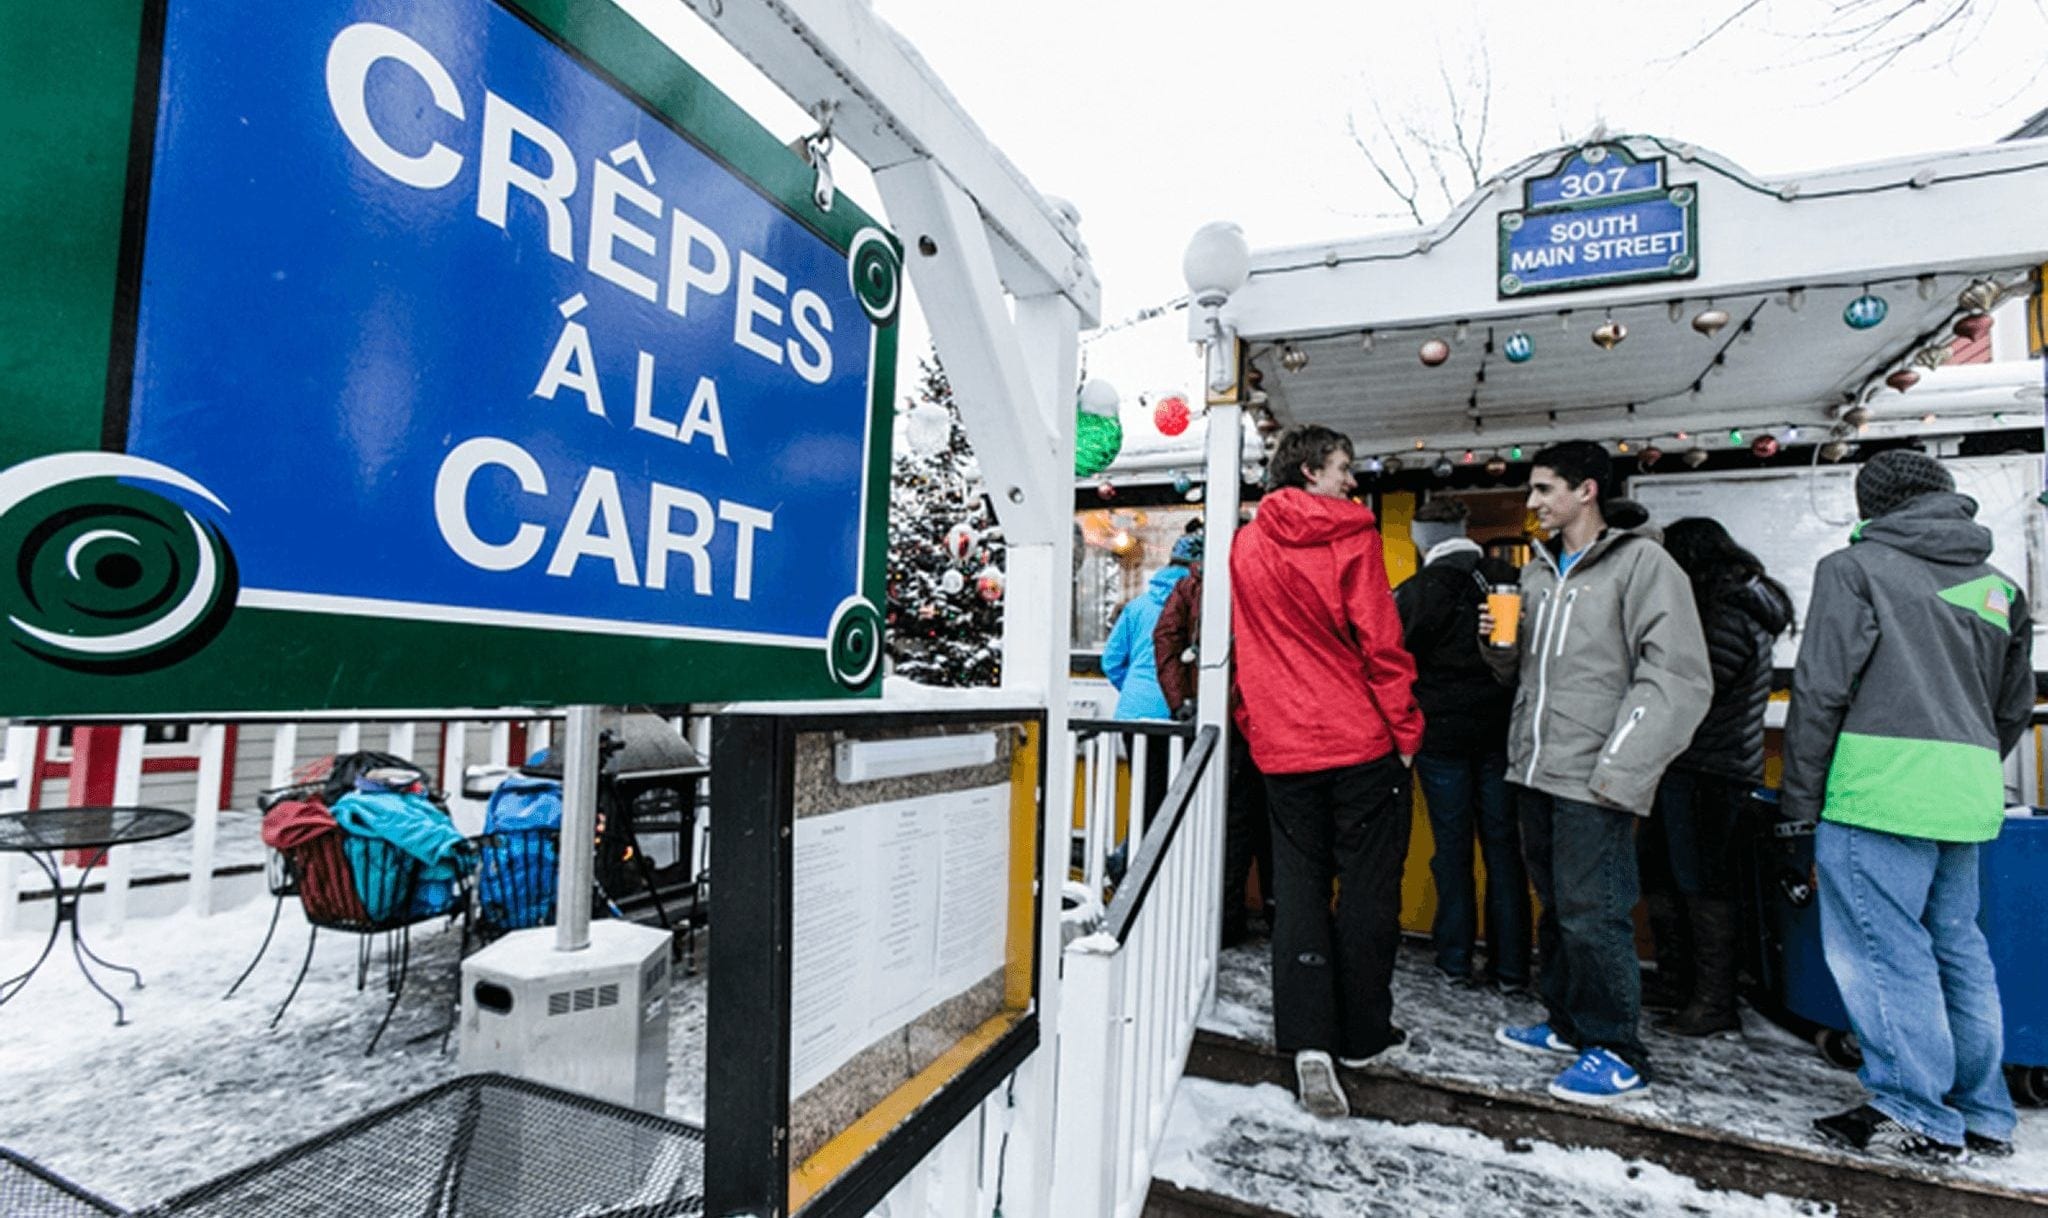 People waiting in line at Crêpes à La Cart in Breckenridge